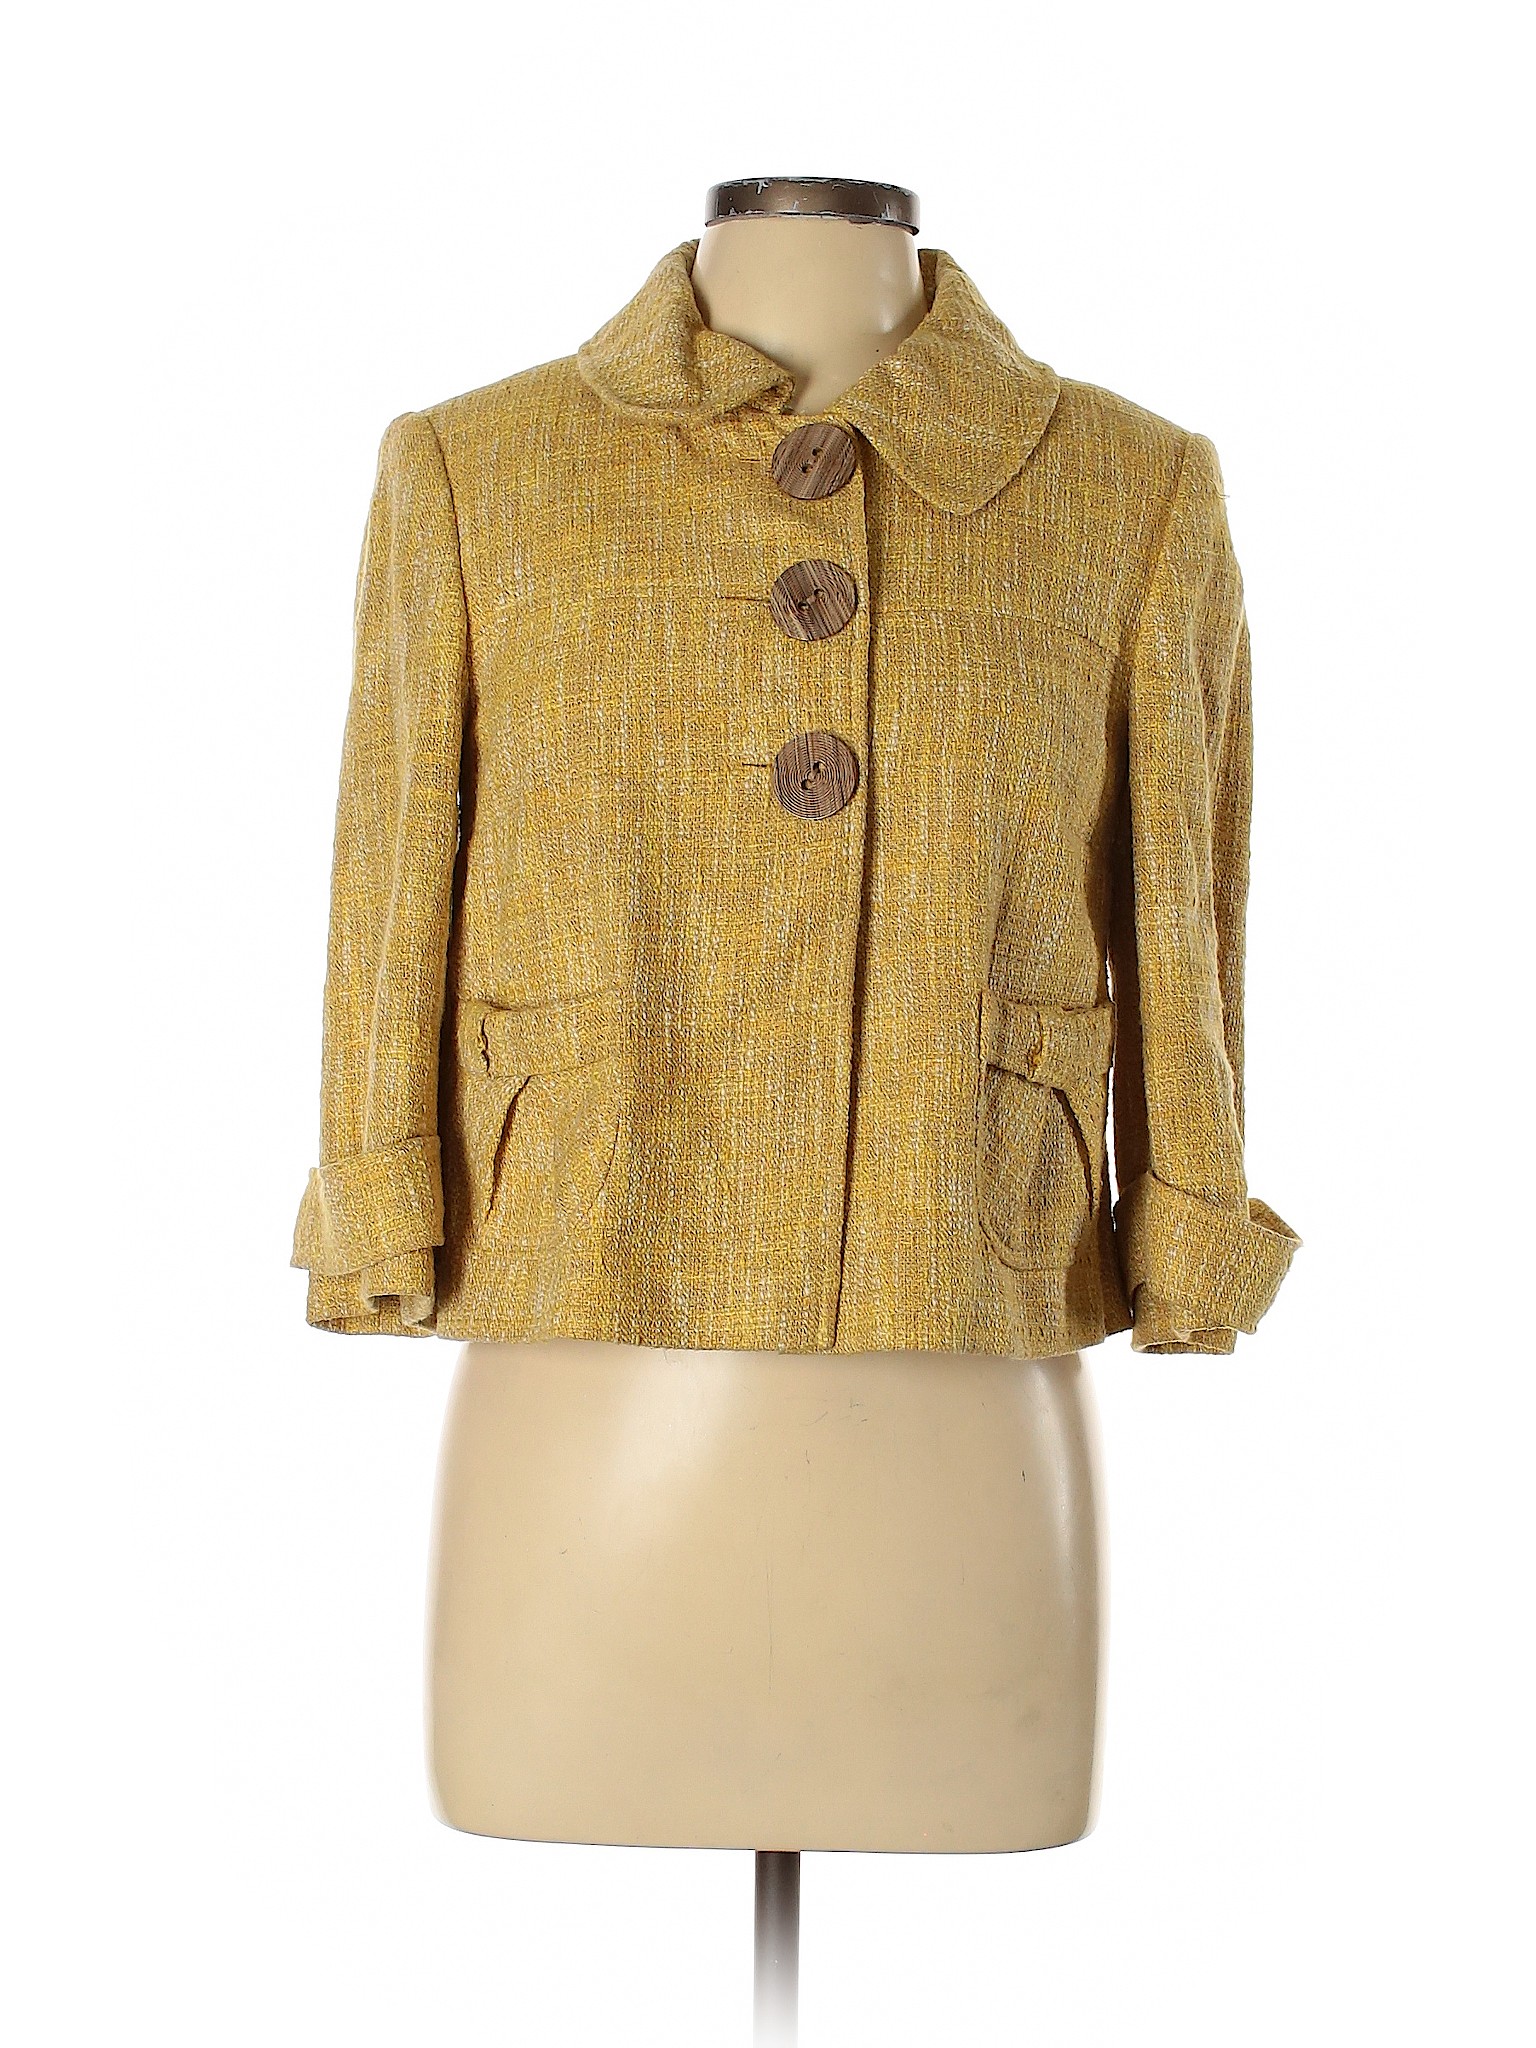 Next Women Yellow Jacket 12 | eBay